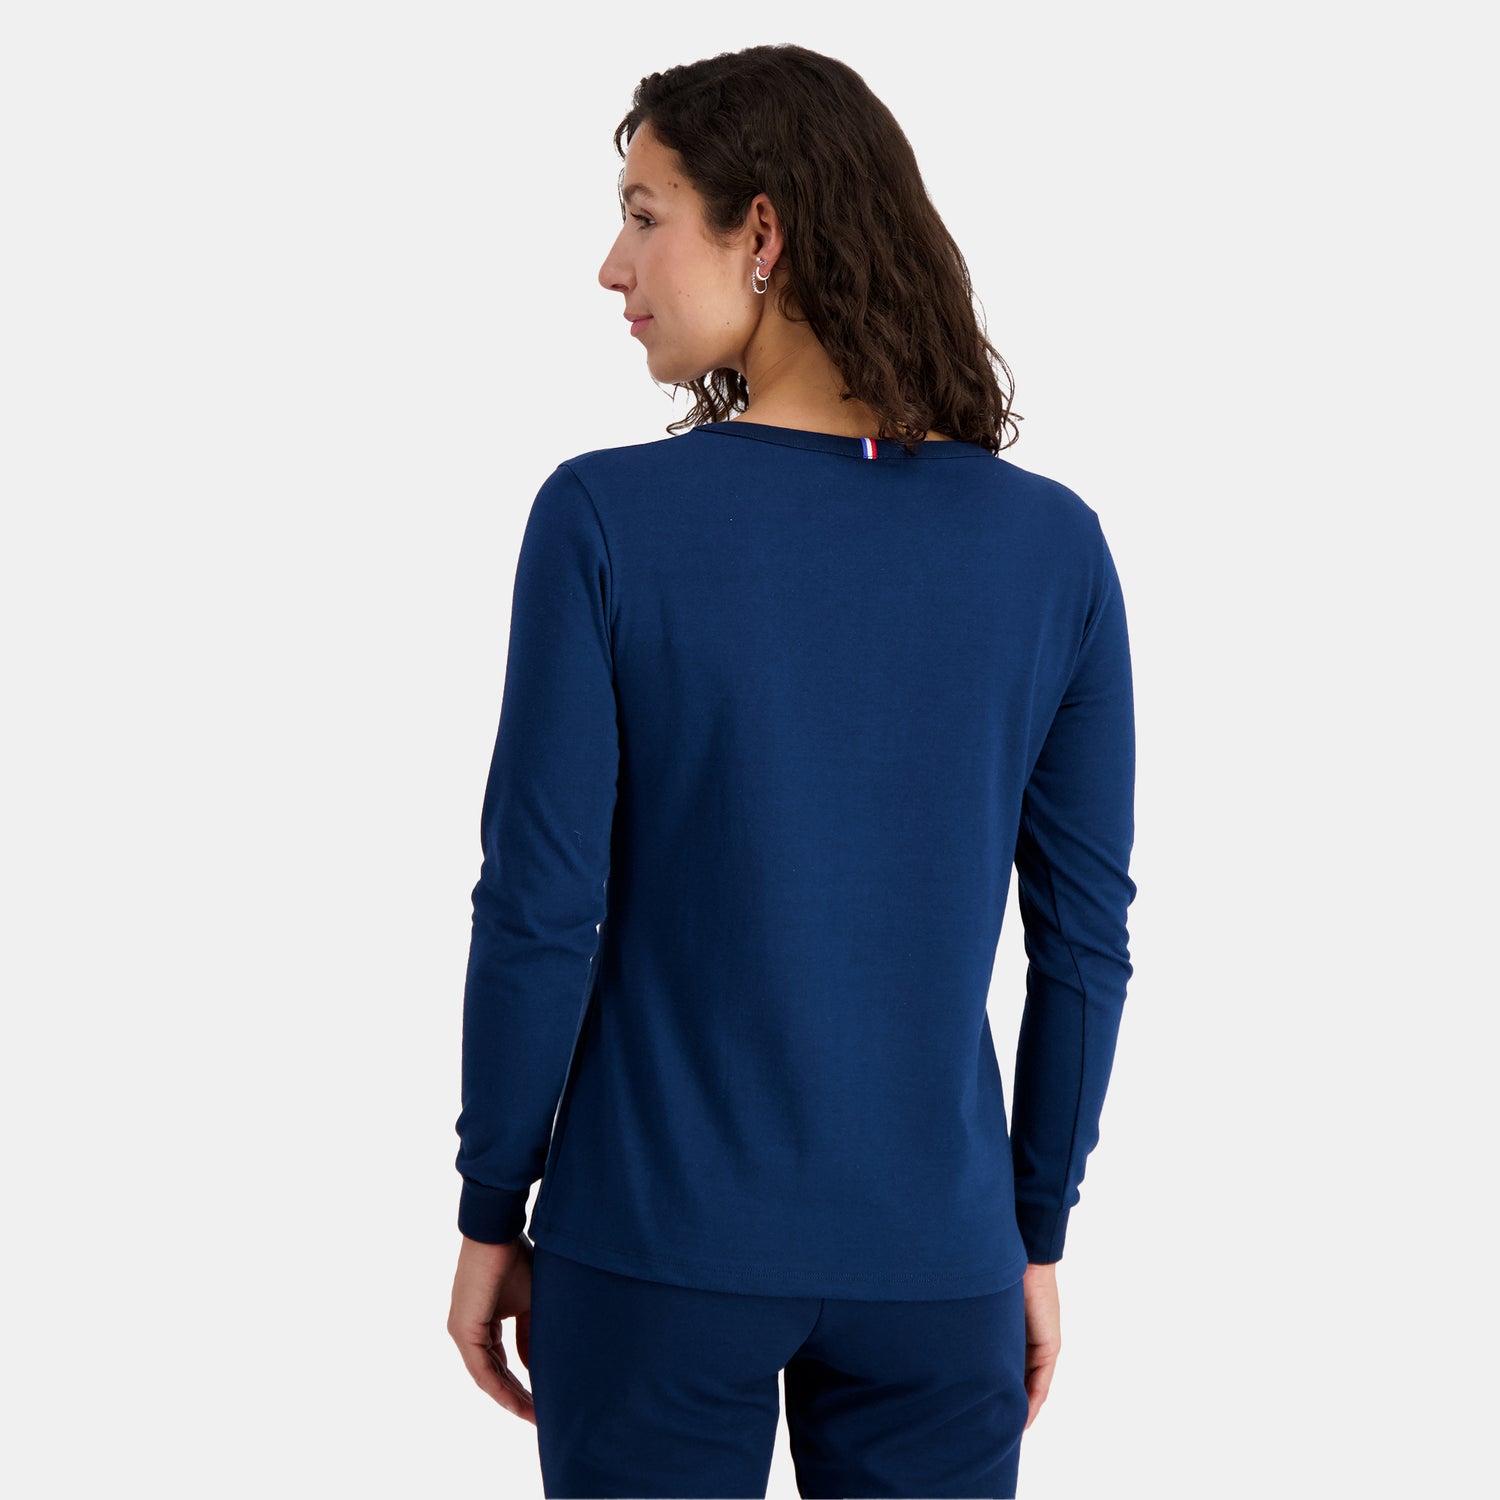 2410165-ESS Tee LS N°1 W victory blue | T-shirt manches longues Femme